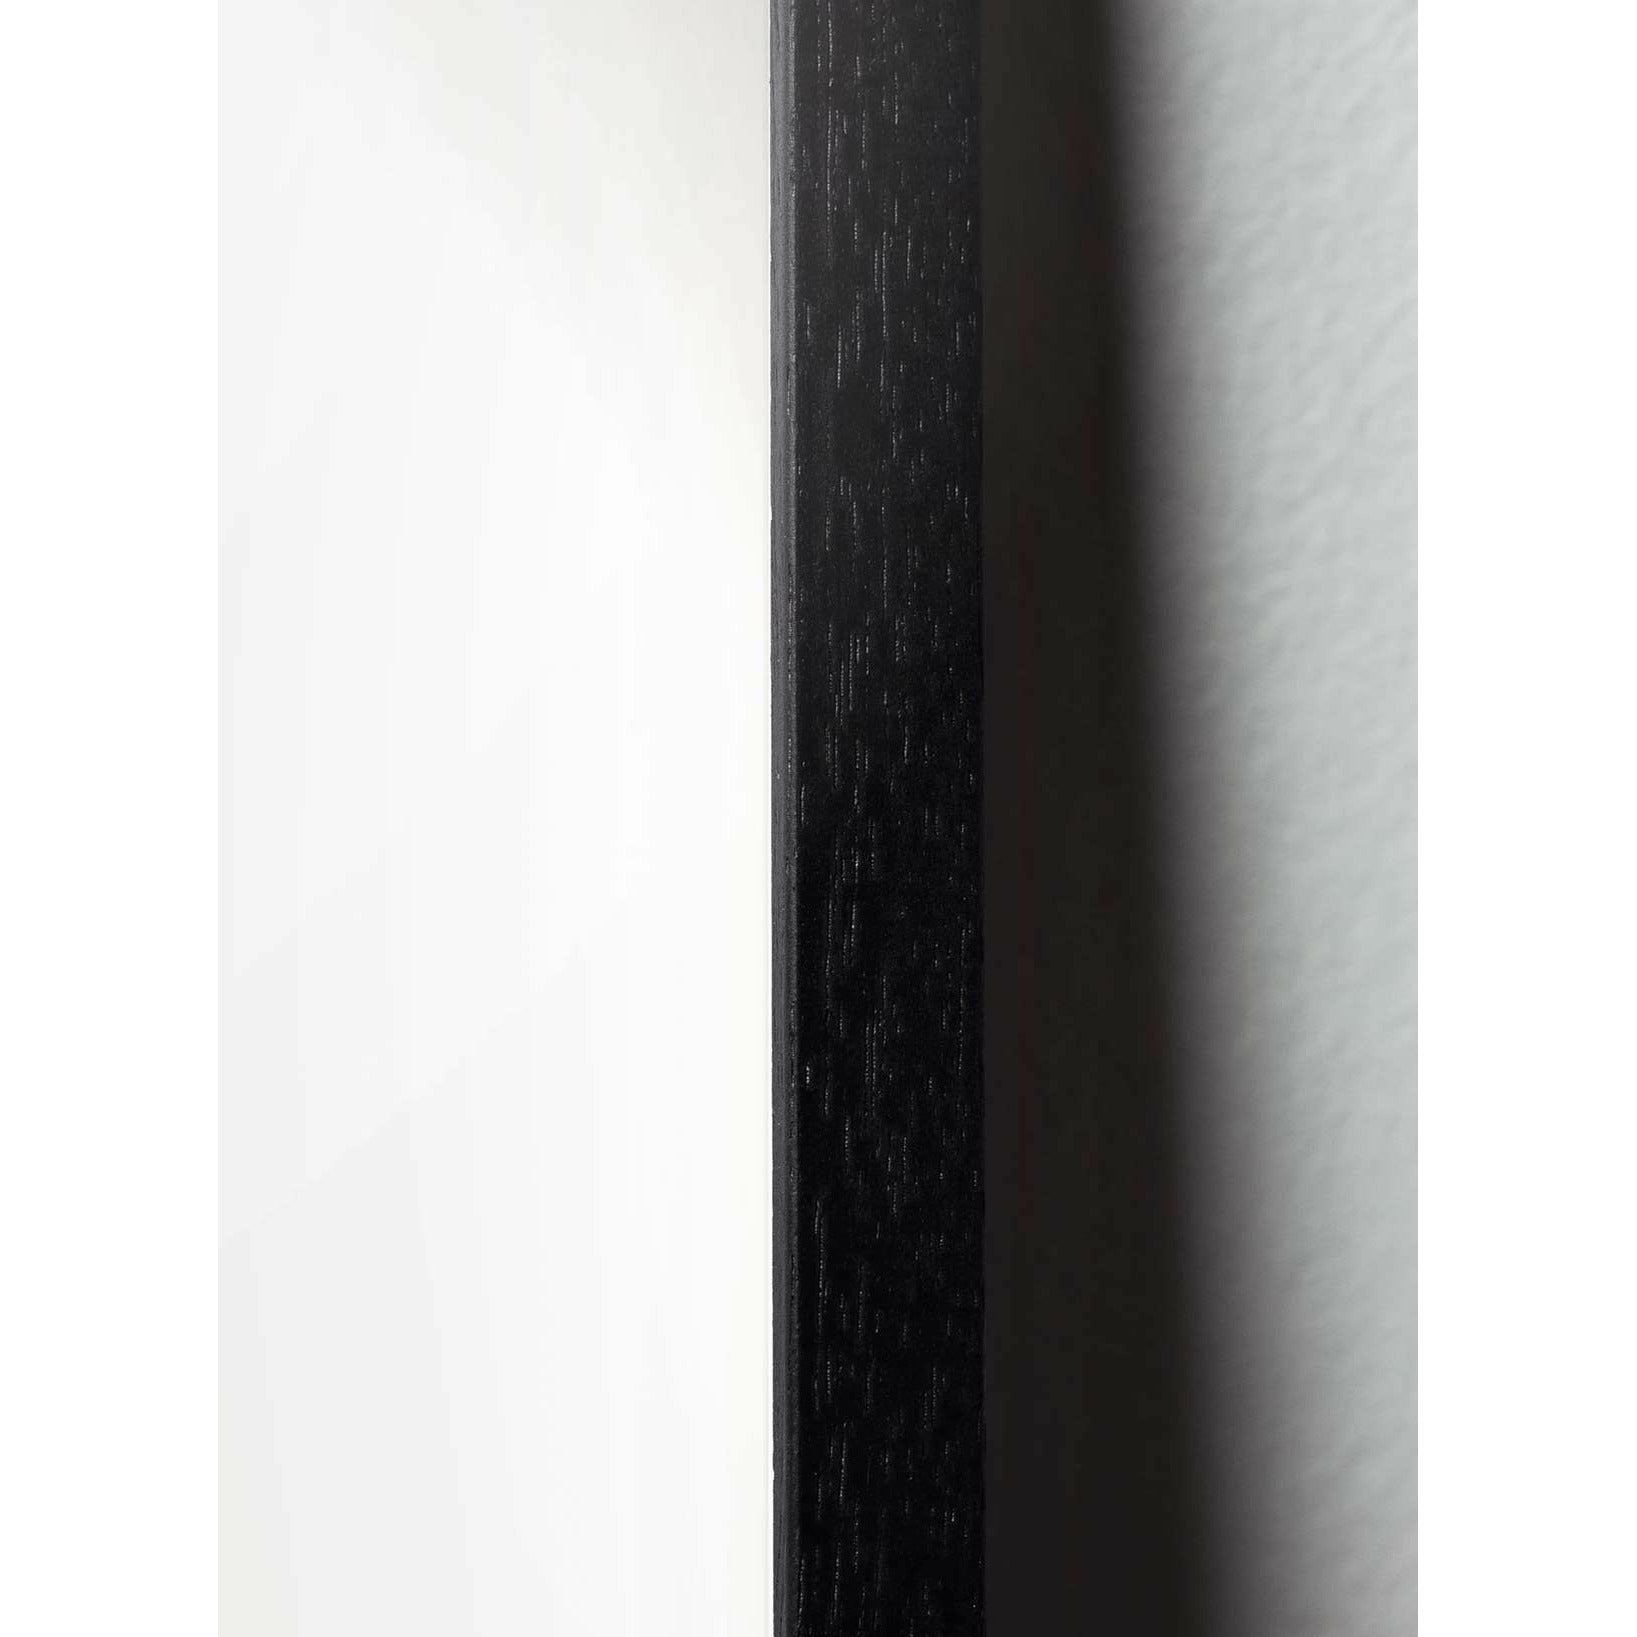 Brainchild Äggfiguraffisch, ram i svart -målat trä 30x40 cm, brunt